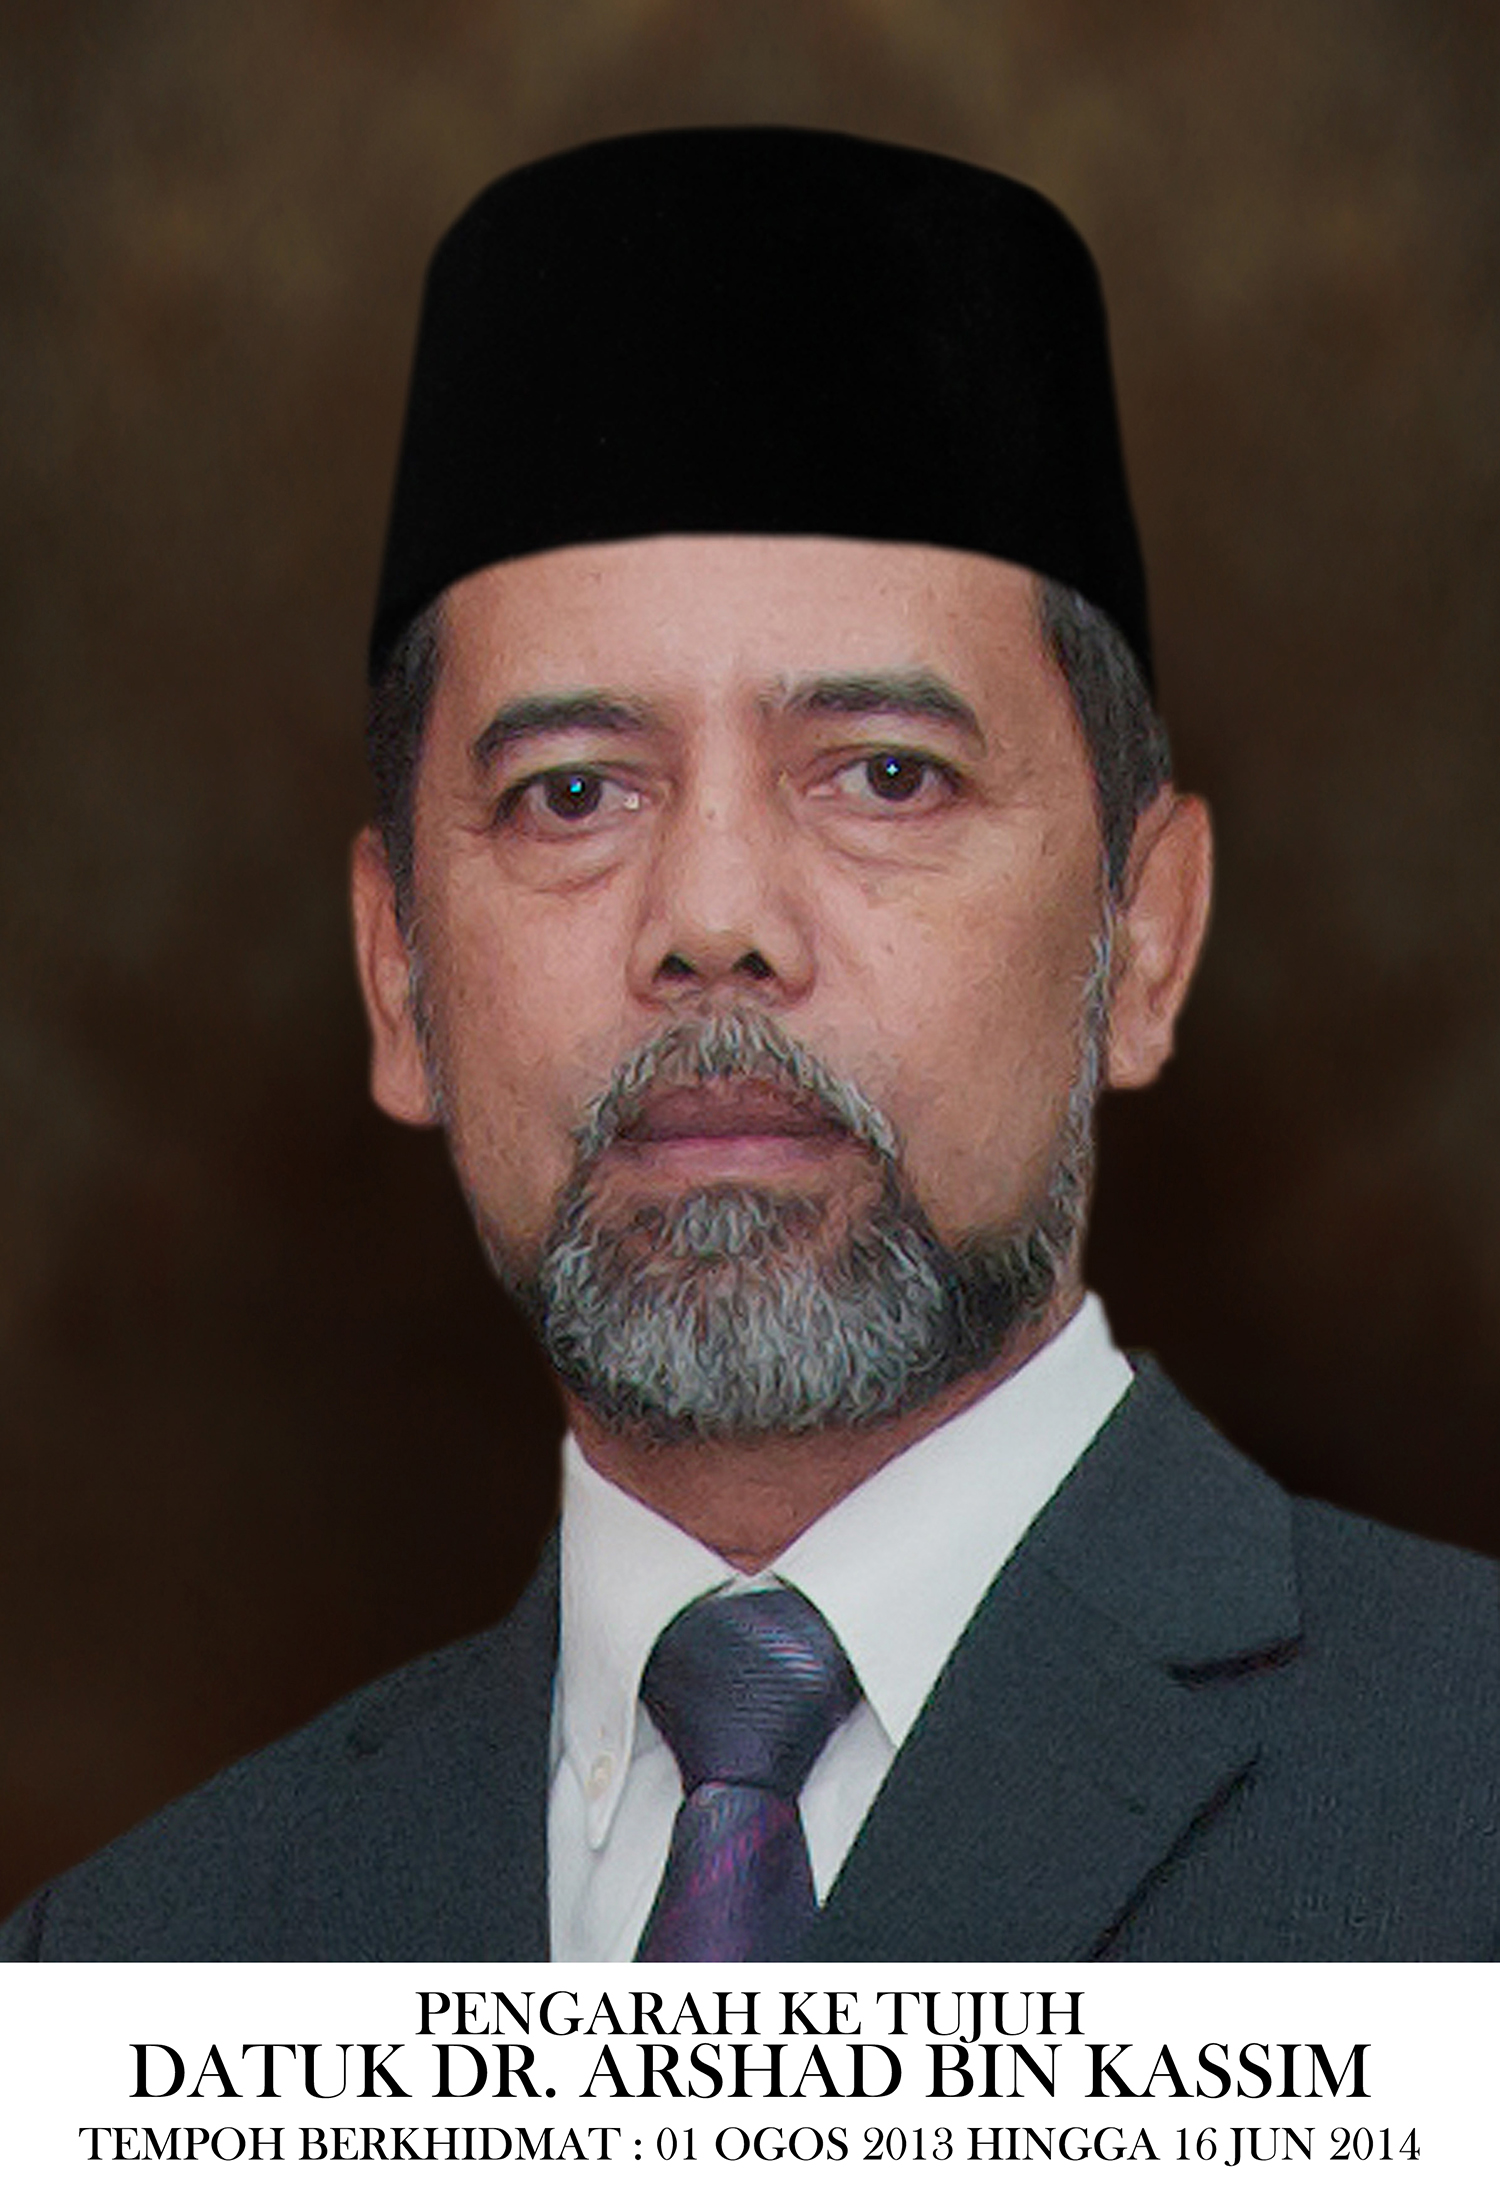 Datuk Dr. Arshad bin Kassim